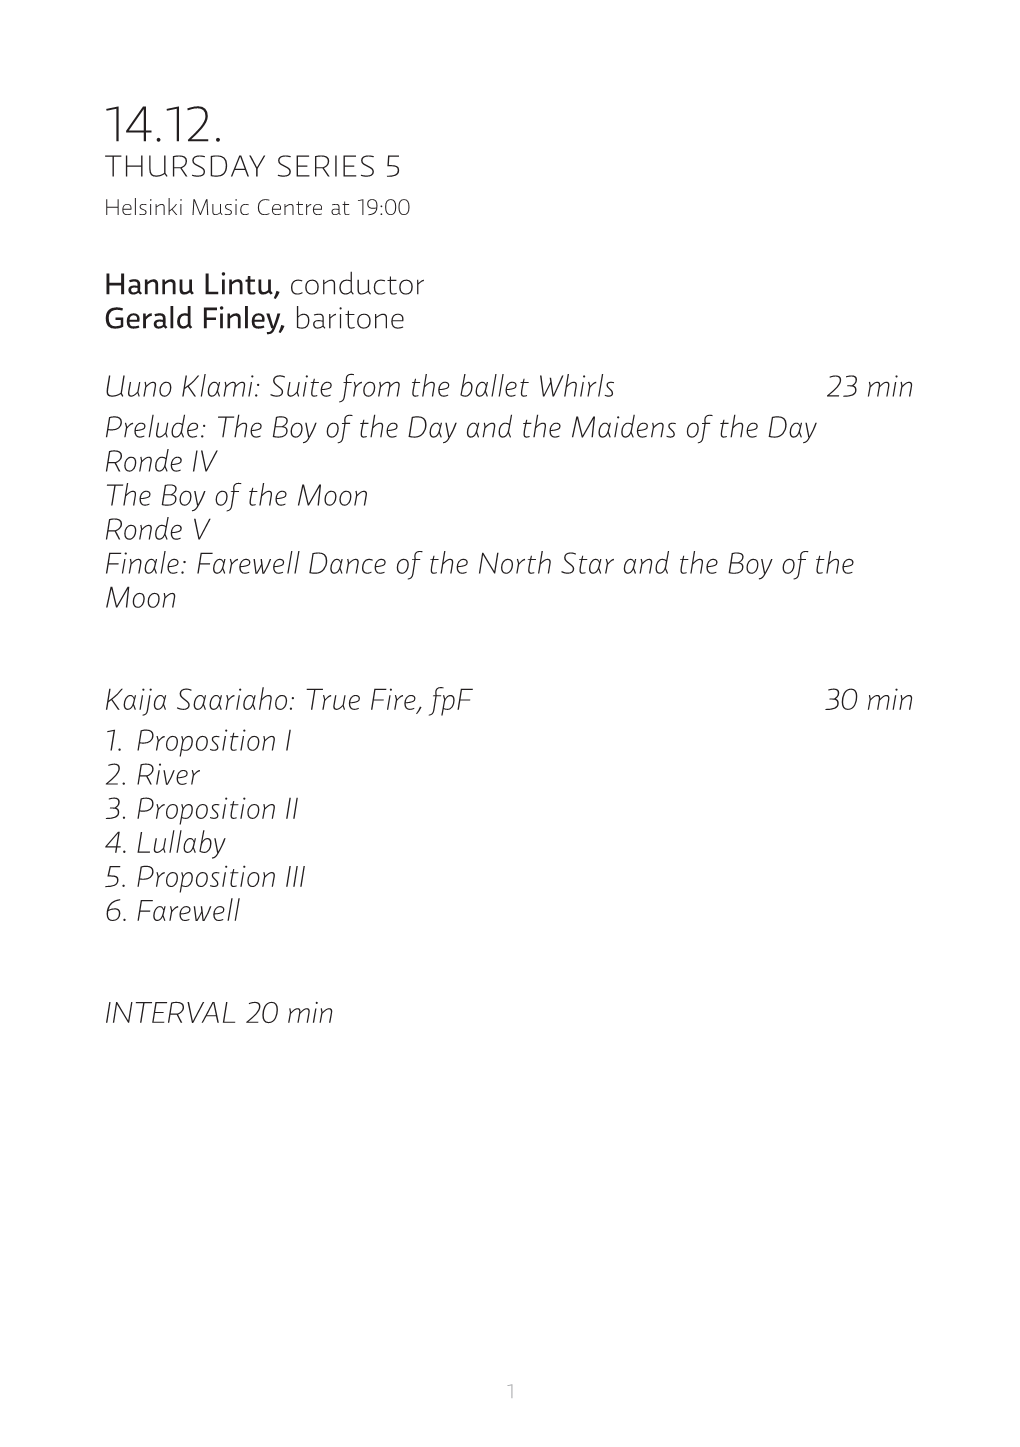 THURSDAY SERIES 5 Hannu Lintu, Conductor Gerald Finley